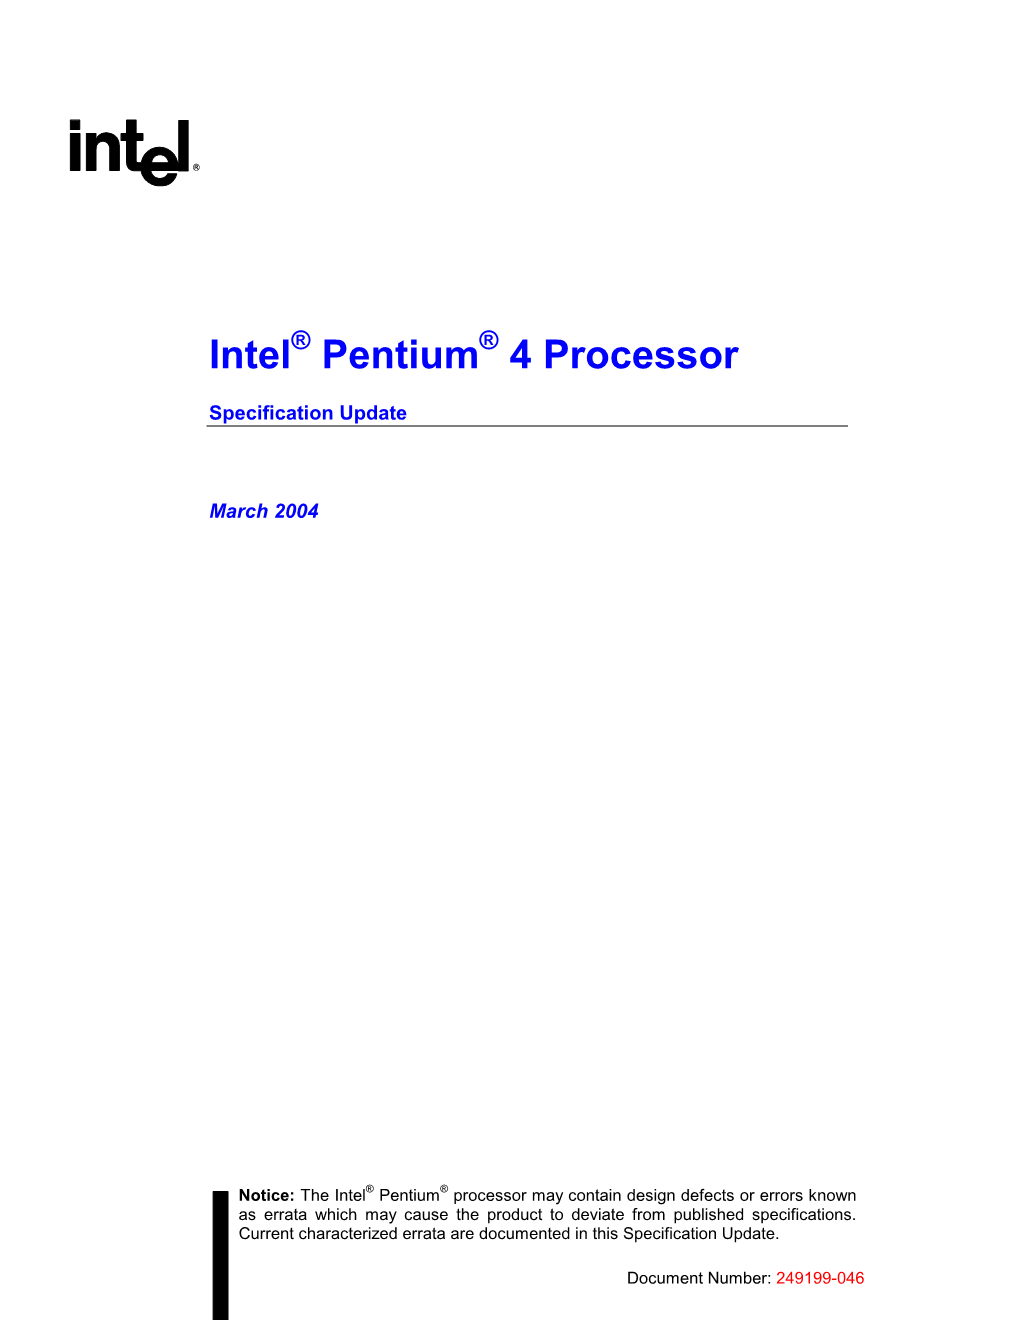 Intel(R) Pentiu(R) 4 Processor Specification Update